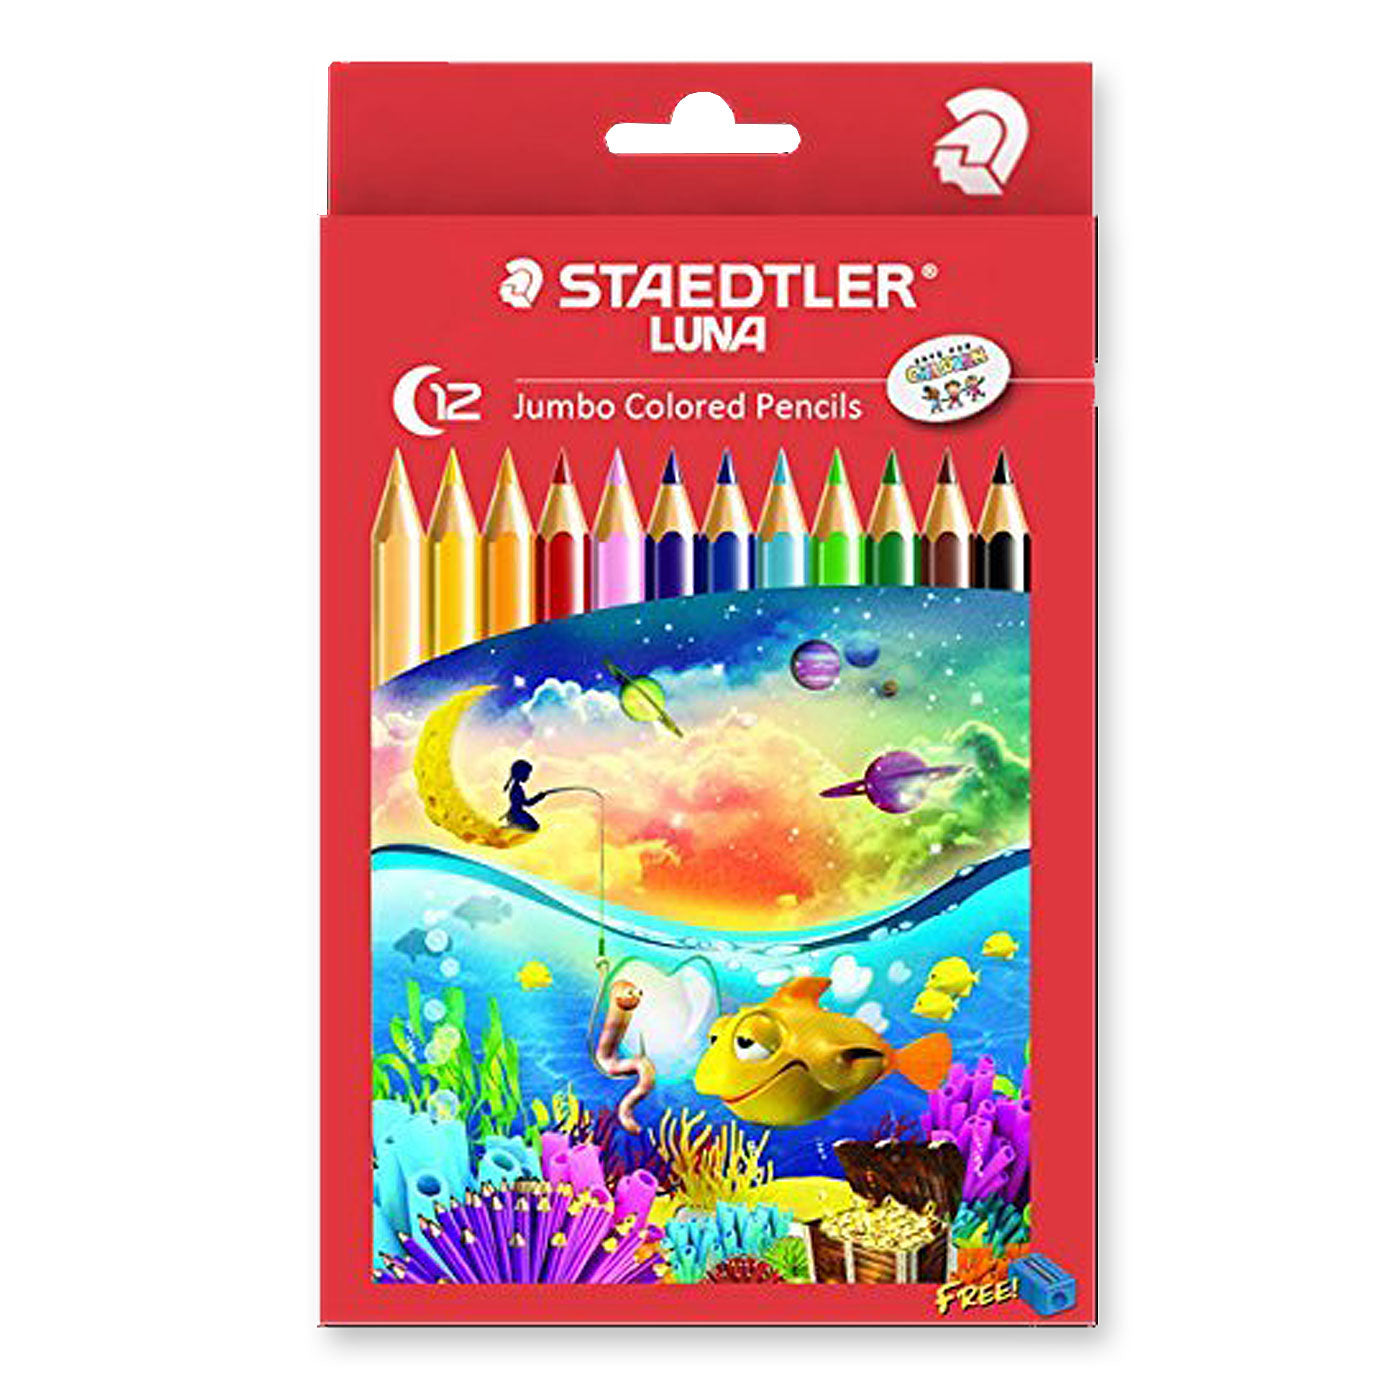 Staedtler Luna Jumbo Coloured Pencils with Free Sharpener 12 Pack